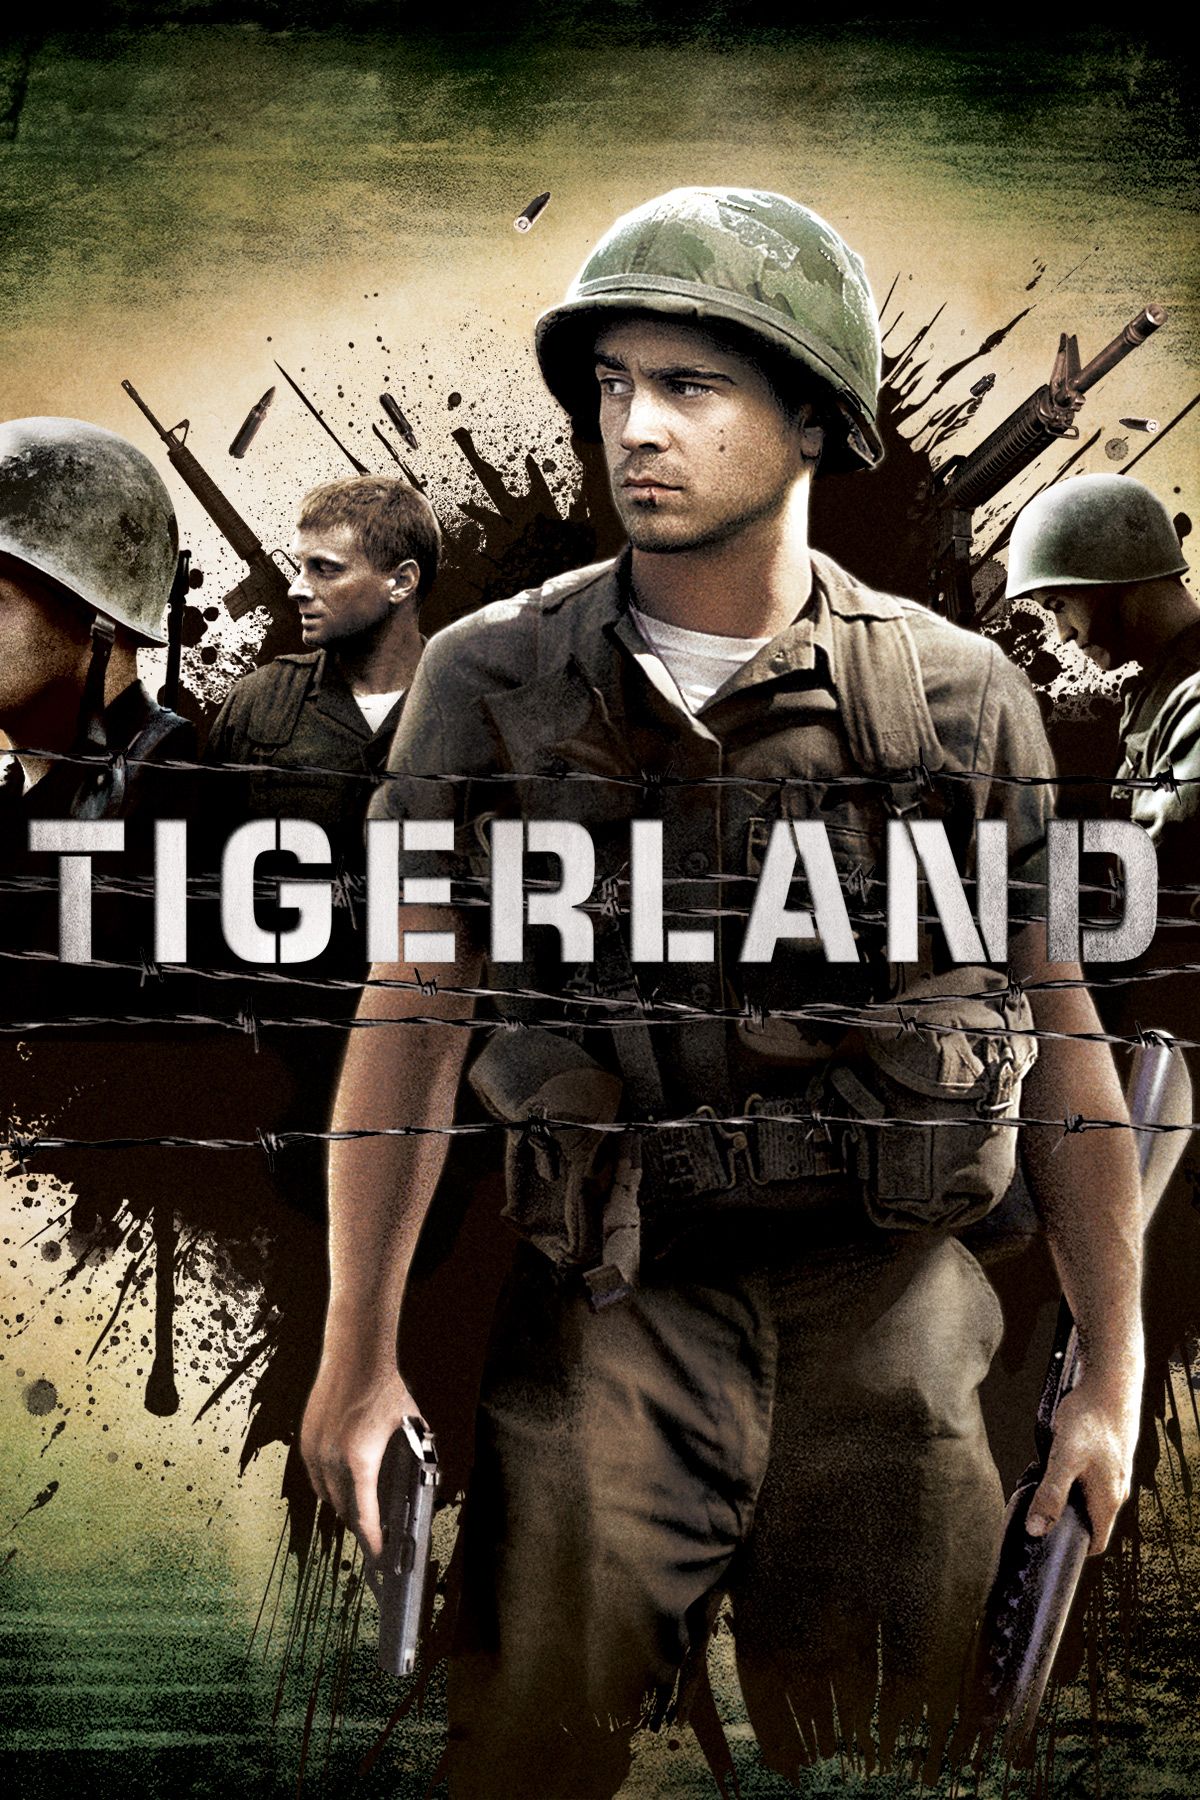 Stiahni si HD Filmy Tabor tygru / Tigerland (2000)(CZ/EN)[1080pHD] = CSFD 78%